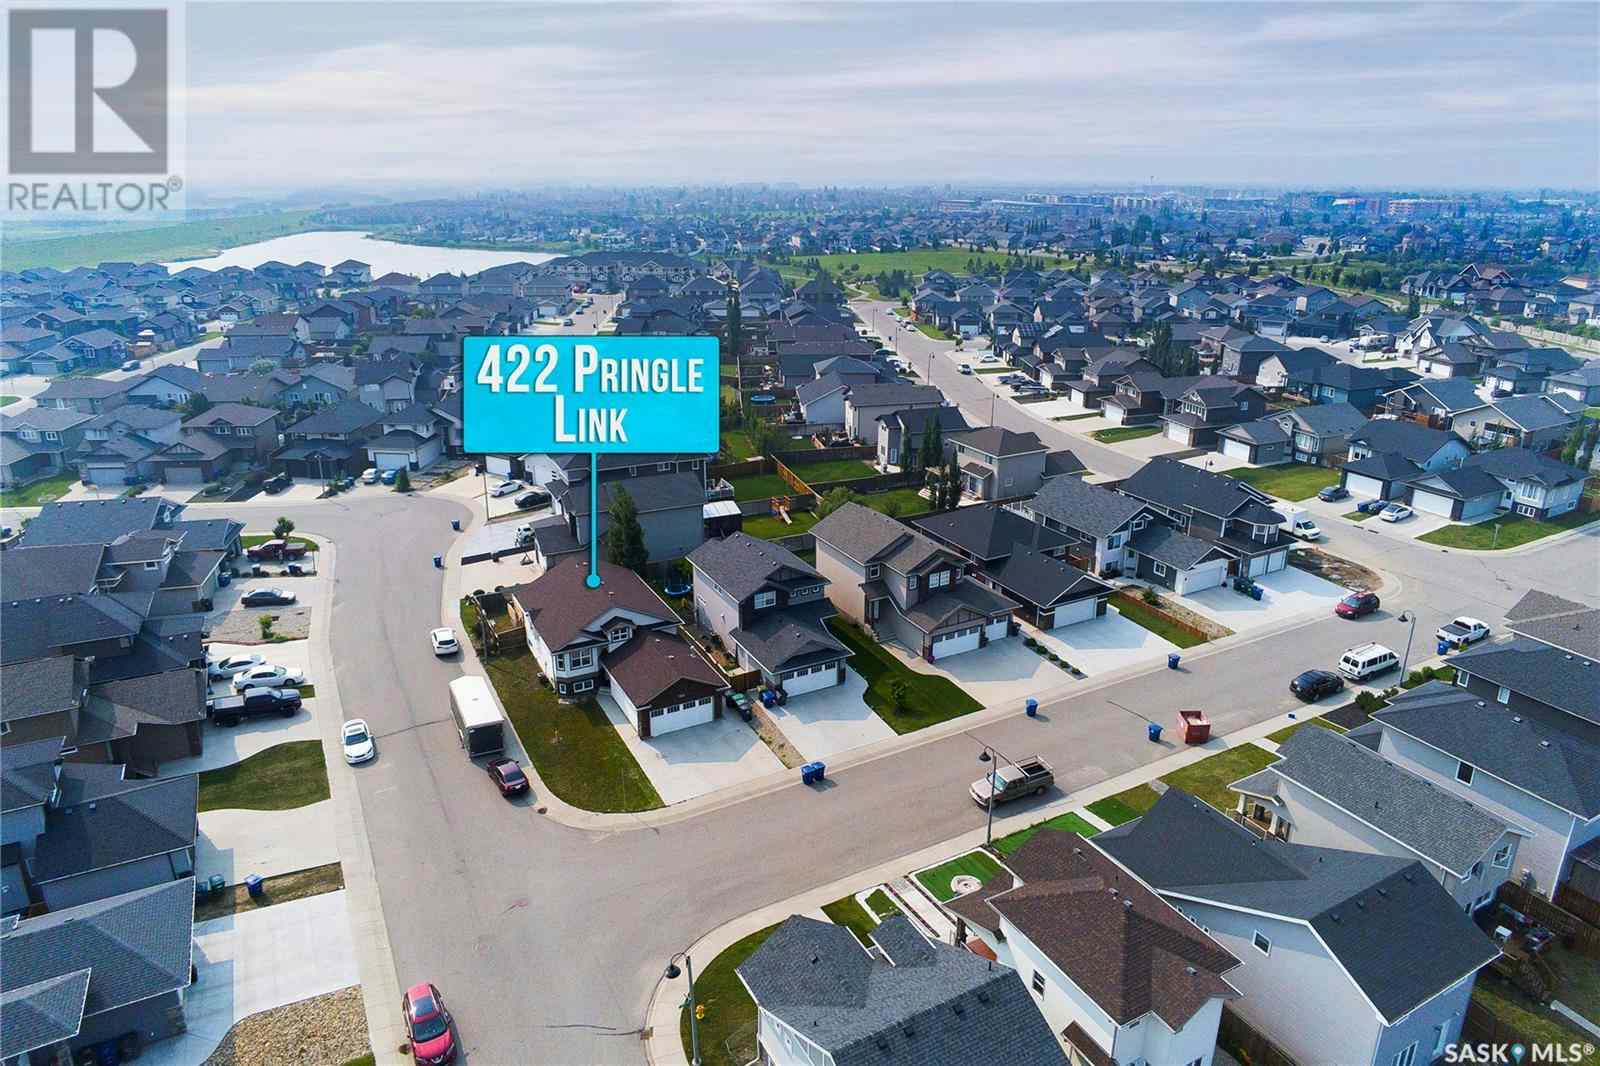 Property for Sale: 422 Pringle LINK, Saskatoon, Saskatchewan, S7T0S5